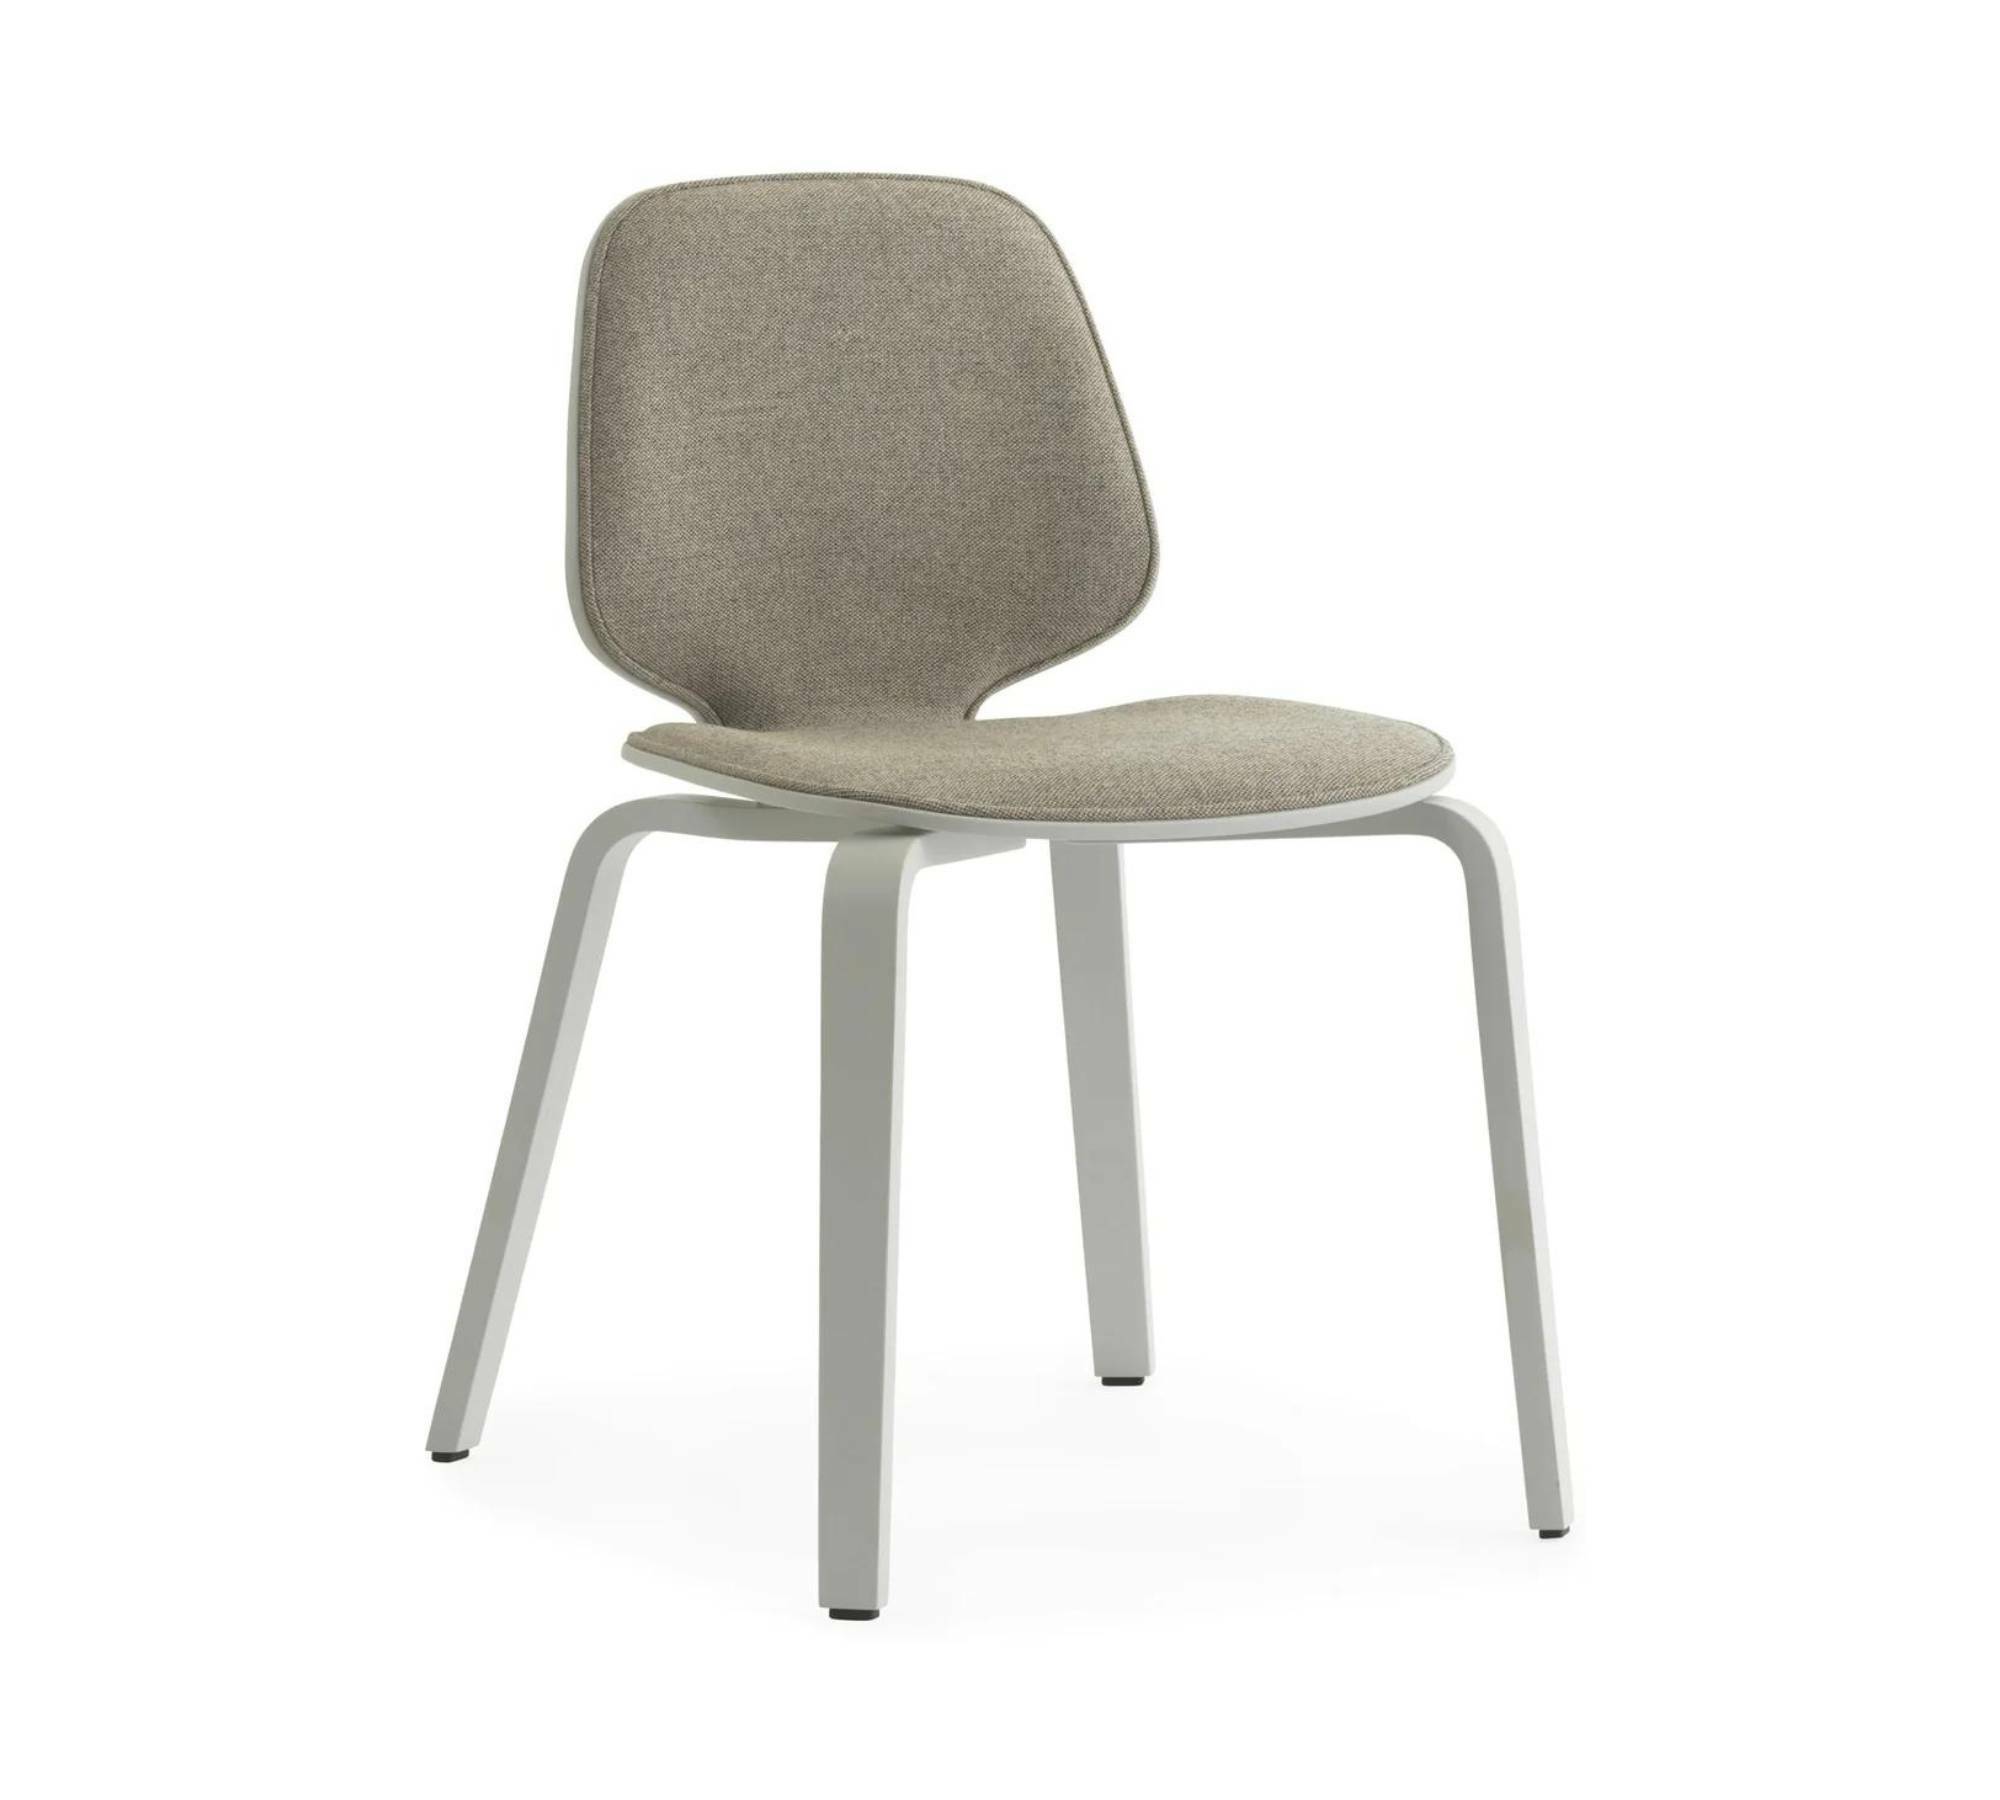 My Chair Stuhl Holz Textil Grau 0